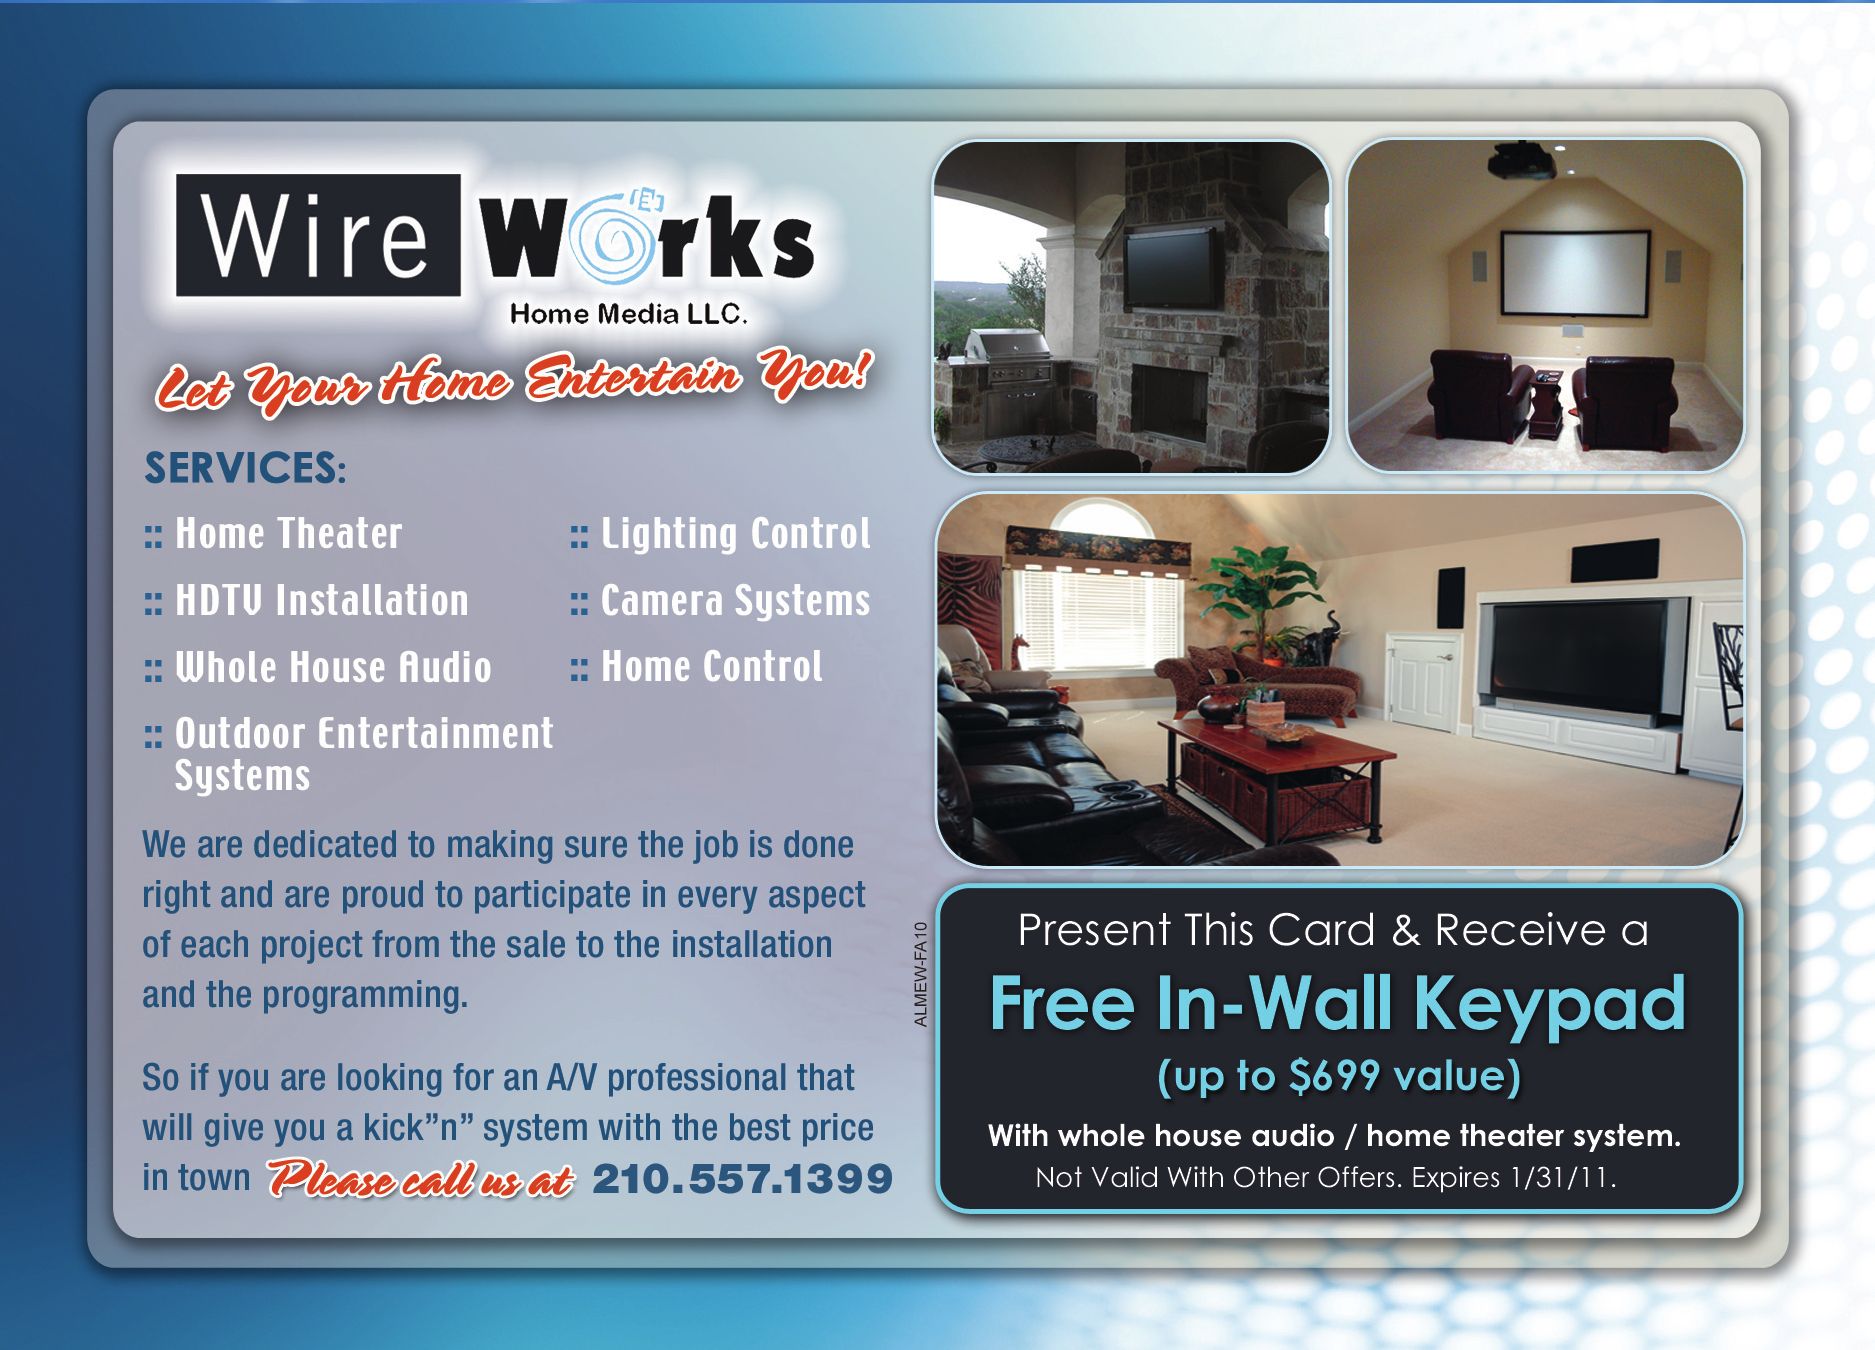 Wire Works Home Media LLC